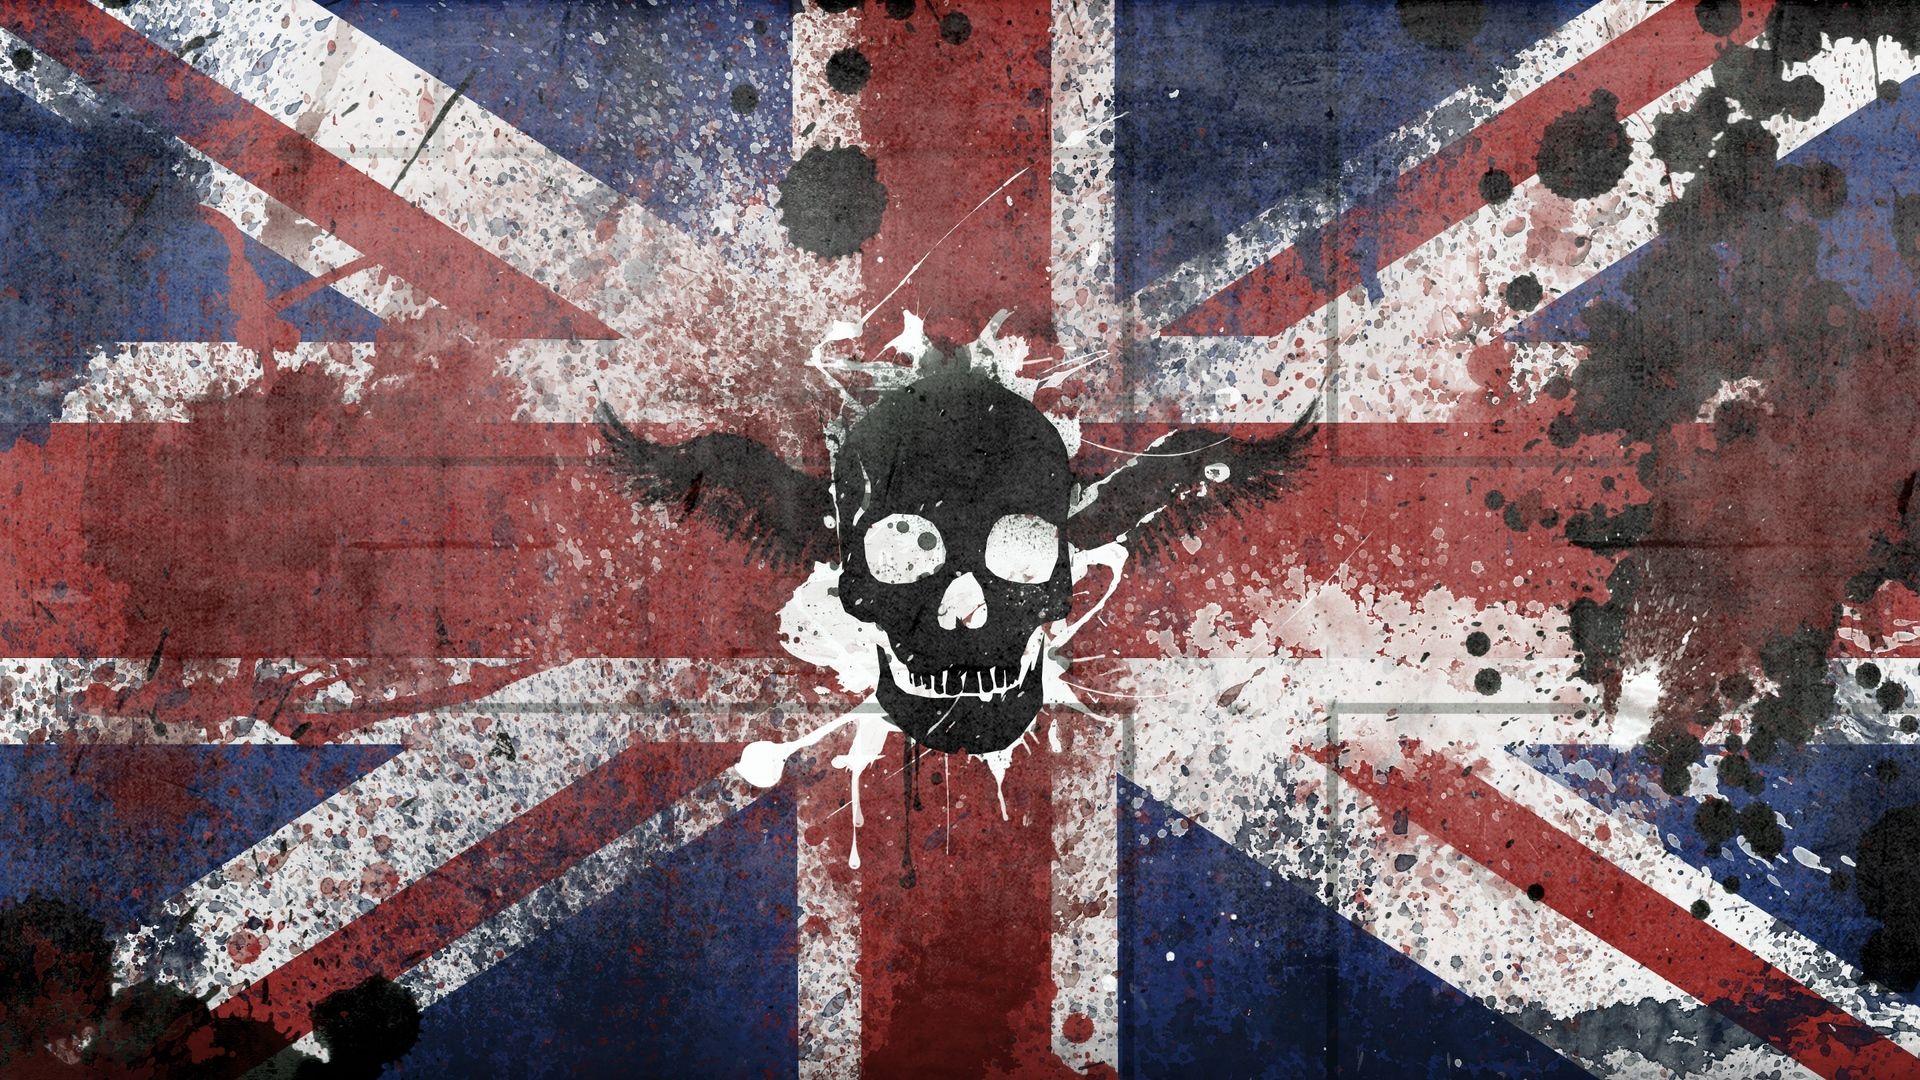 Download wallpaper 1920x1080 britain, united kingdom, symbols, flag